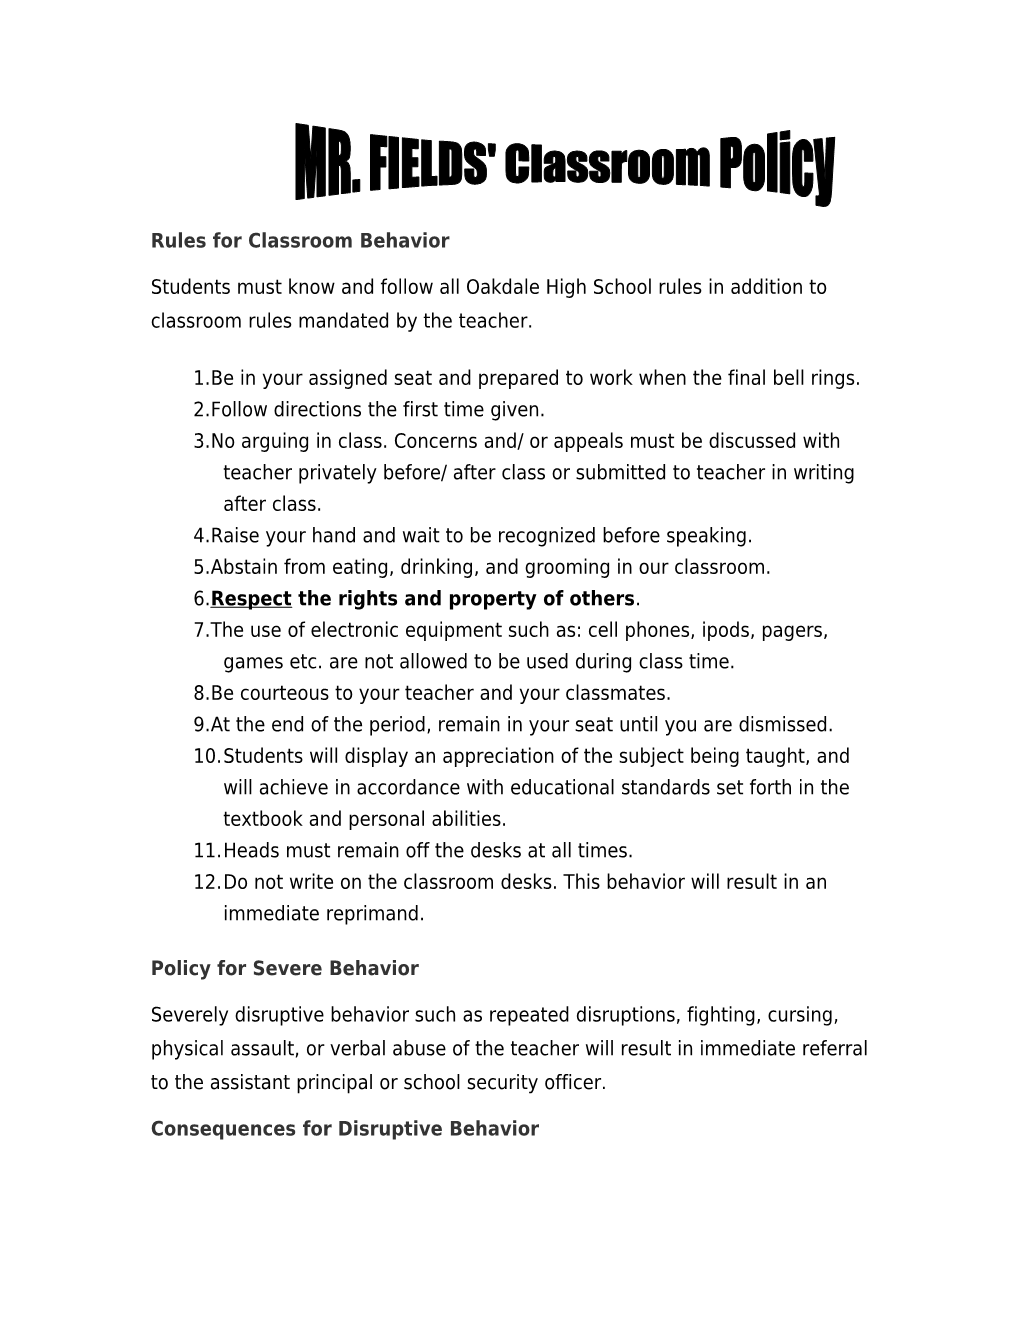 Rules for Classroom Behavior